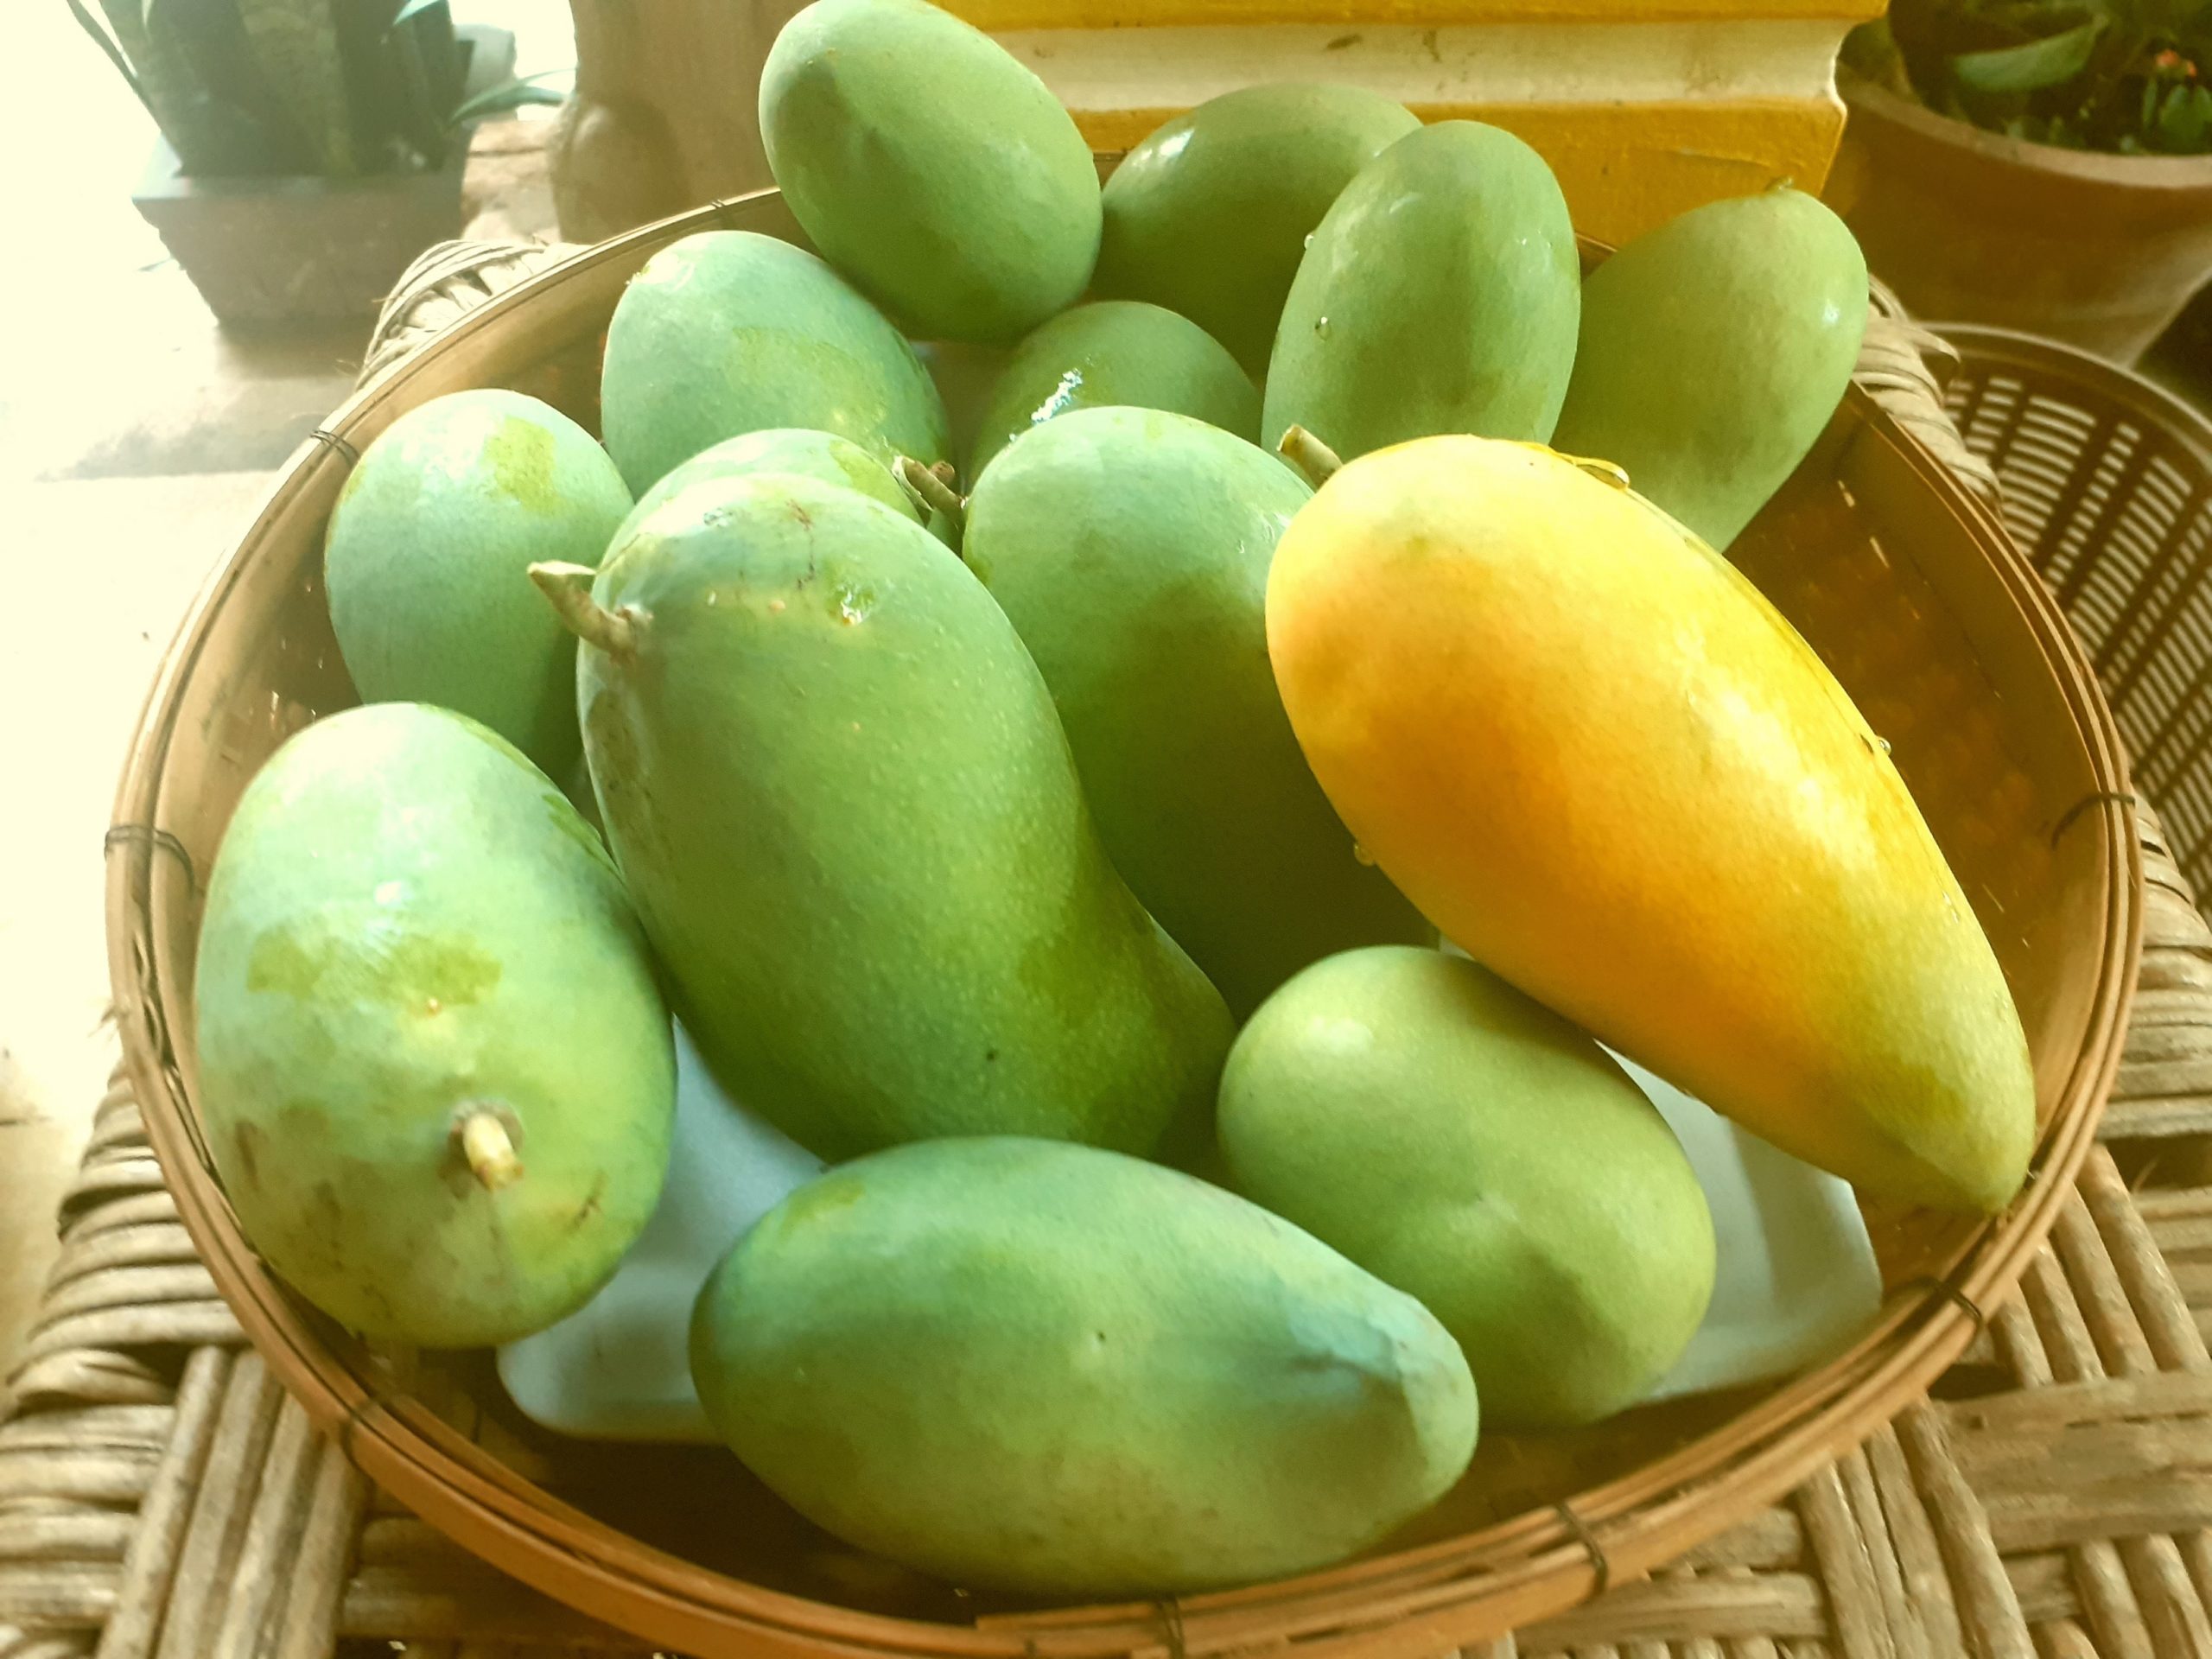 Dry Season or Wet Season? Mango Season! Professionals doing good